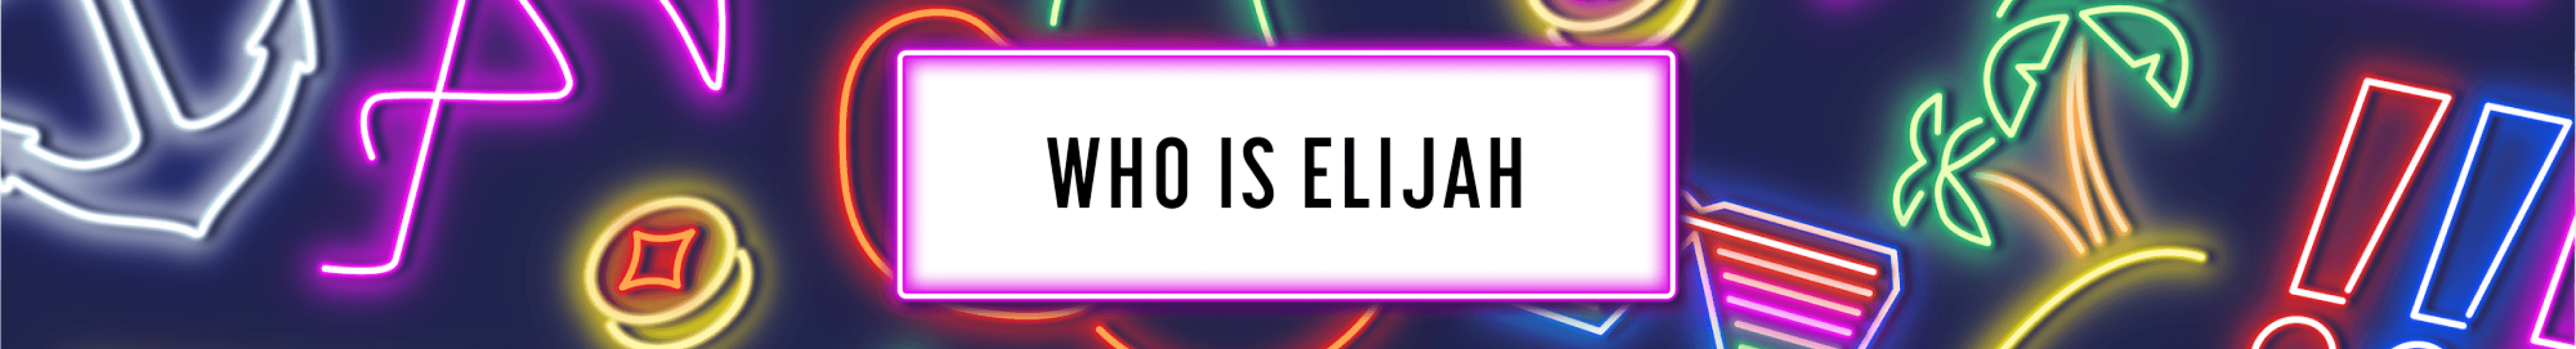 Who is Elijiah Desktop.png